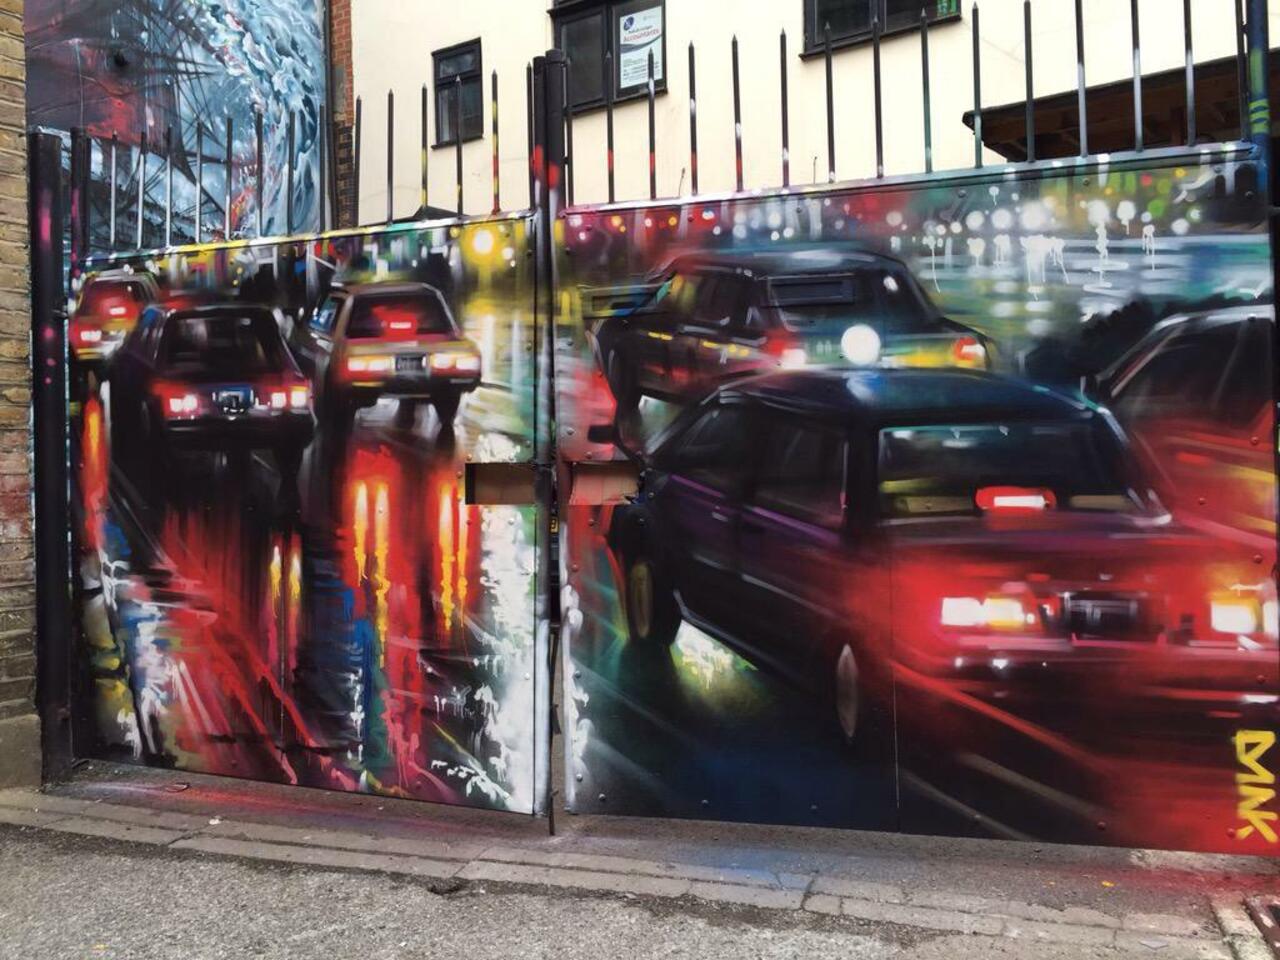 New Street Art by DanKitchener in Brick Lane London 

#art #graffiti #mural #streetart http://t.co/xV6YtMobke